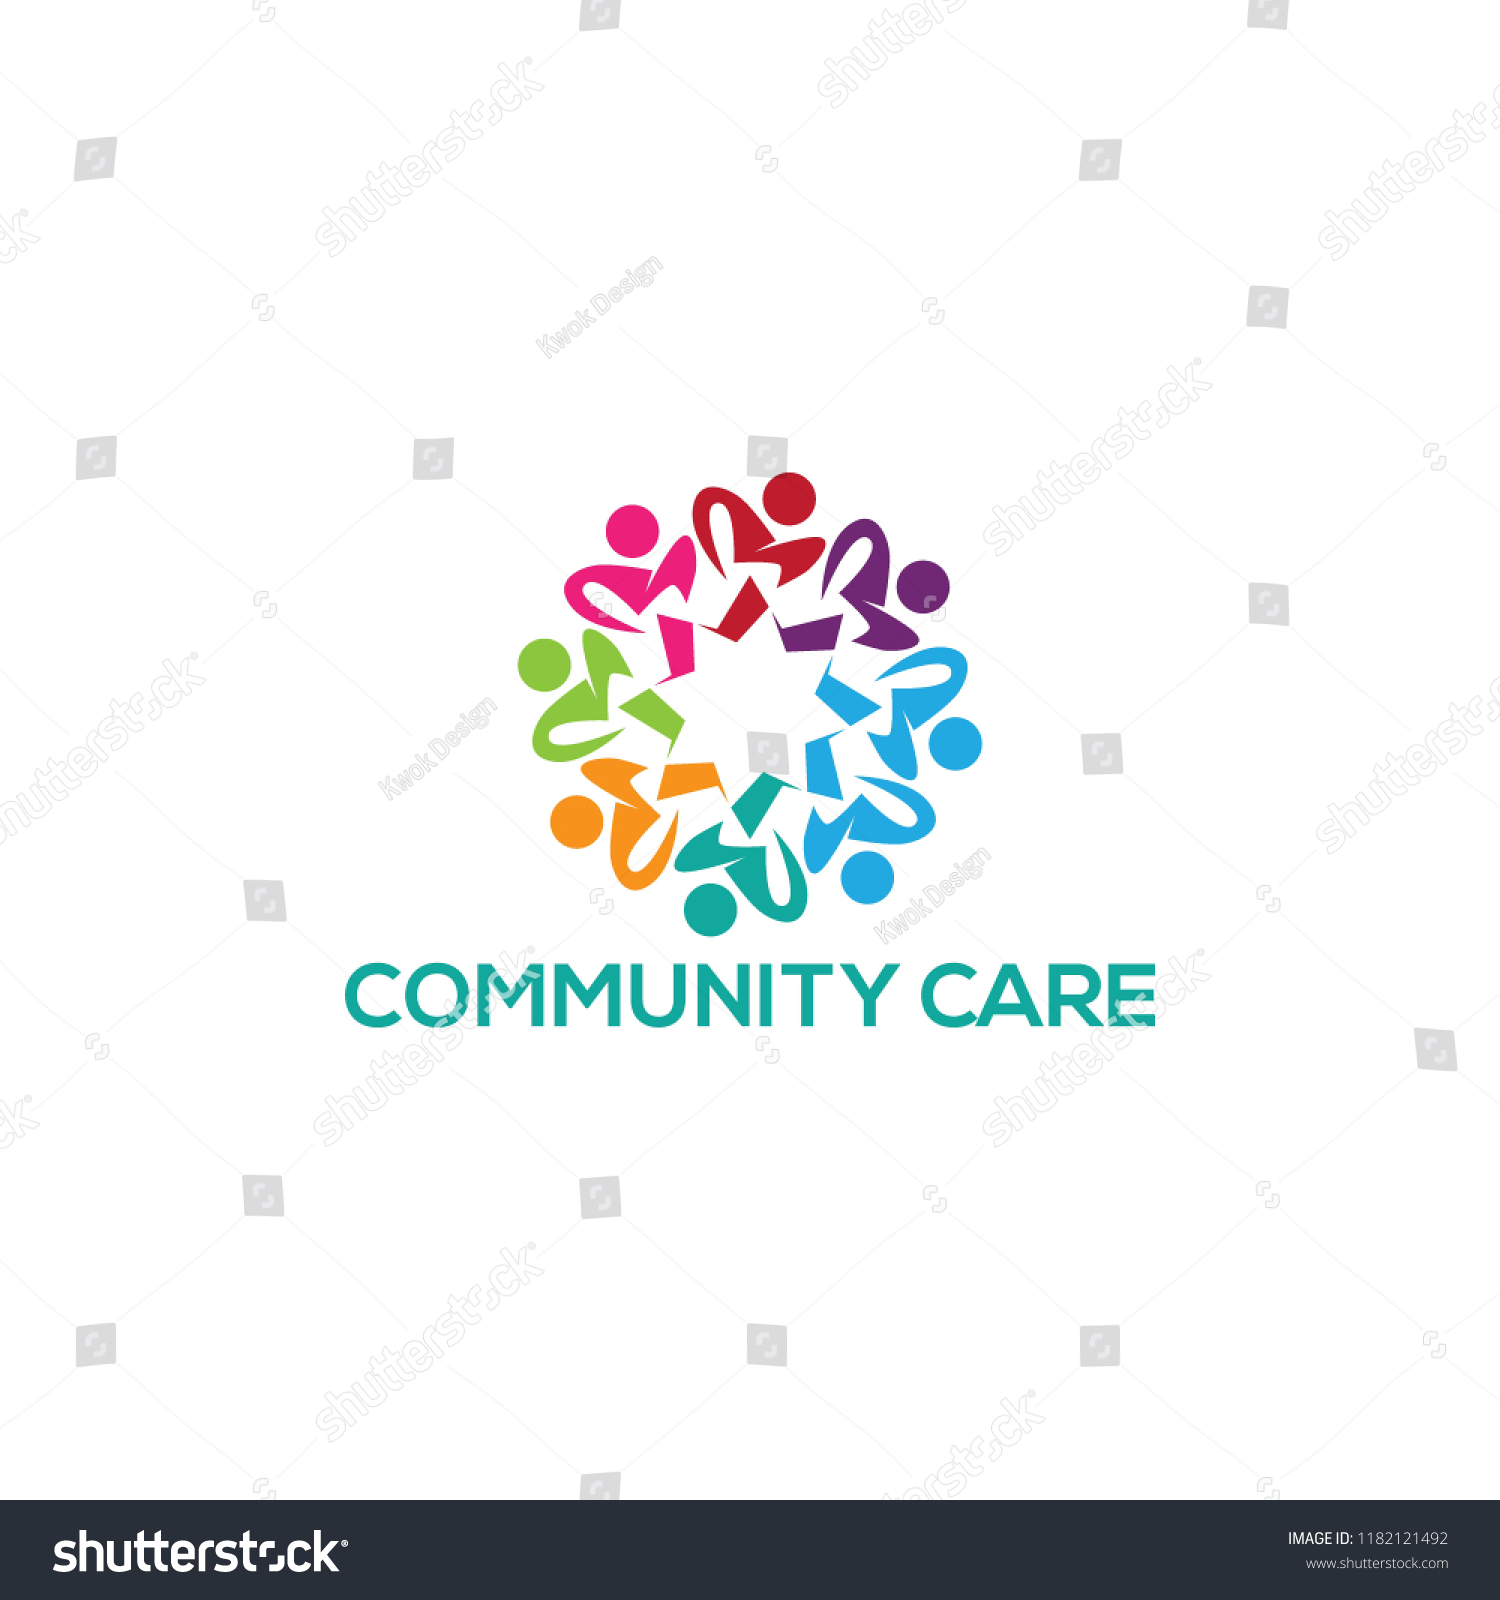 community care logo design, vector illustration #1182121492